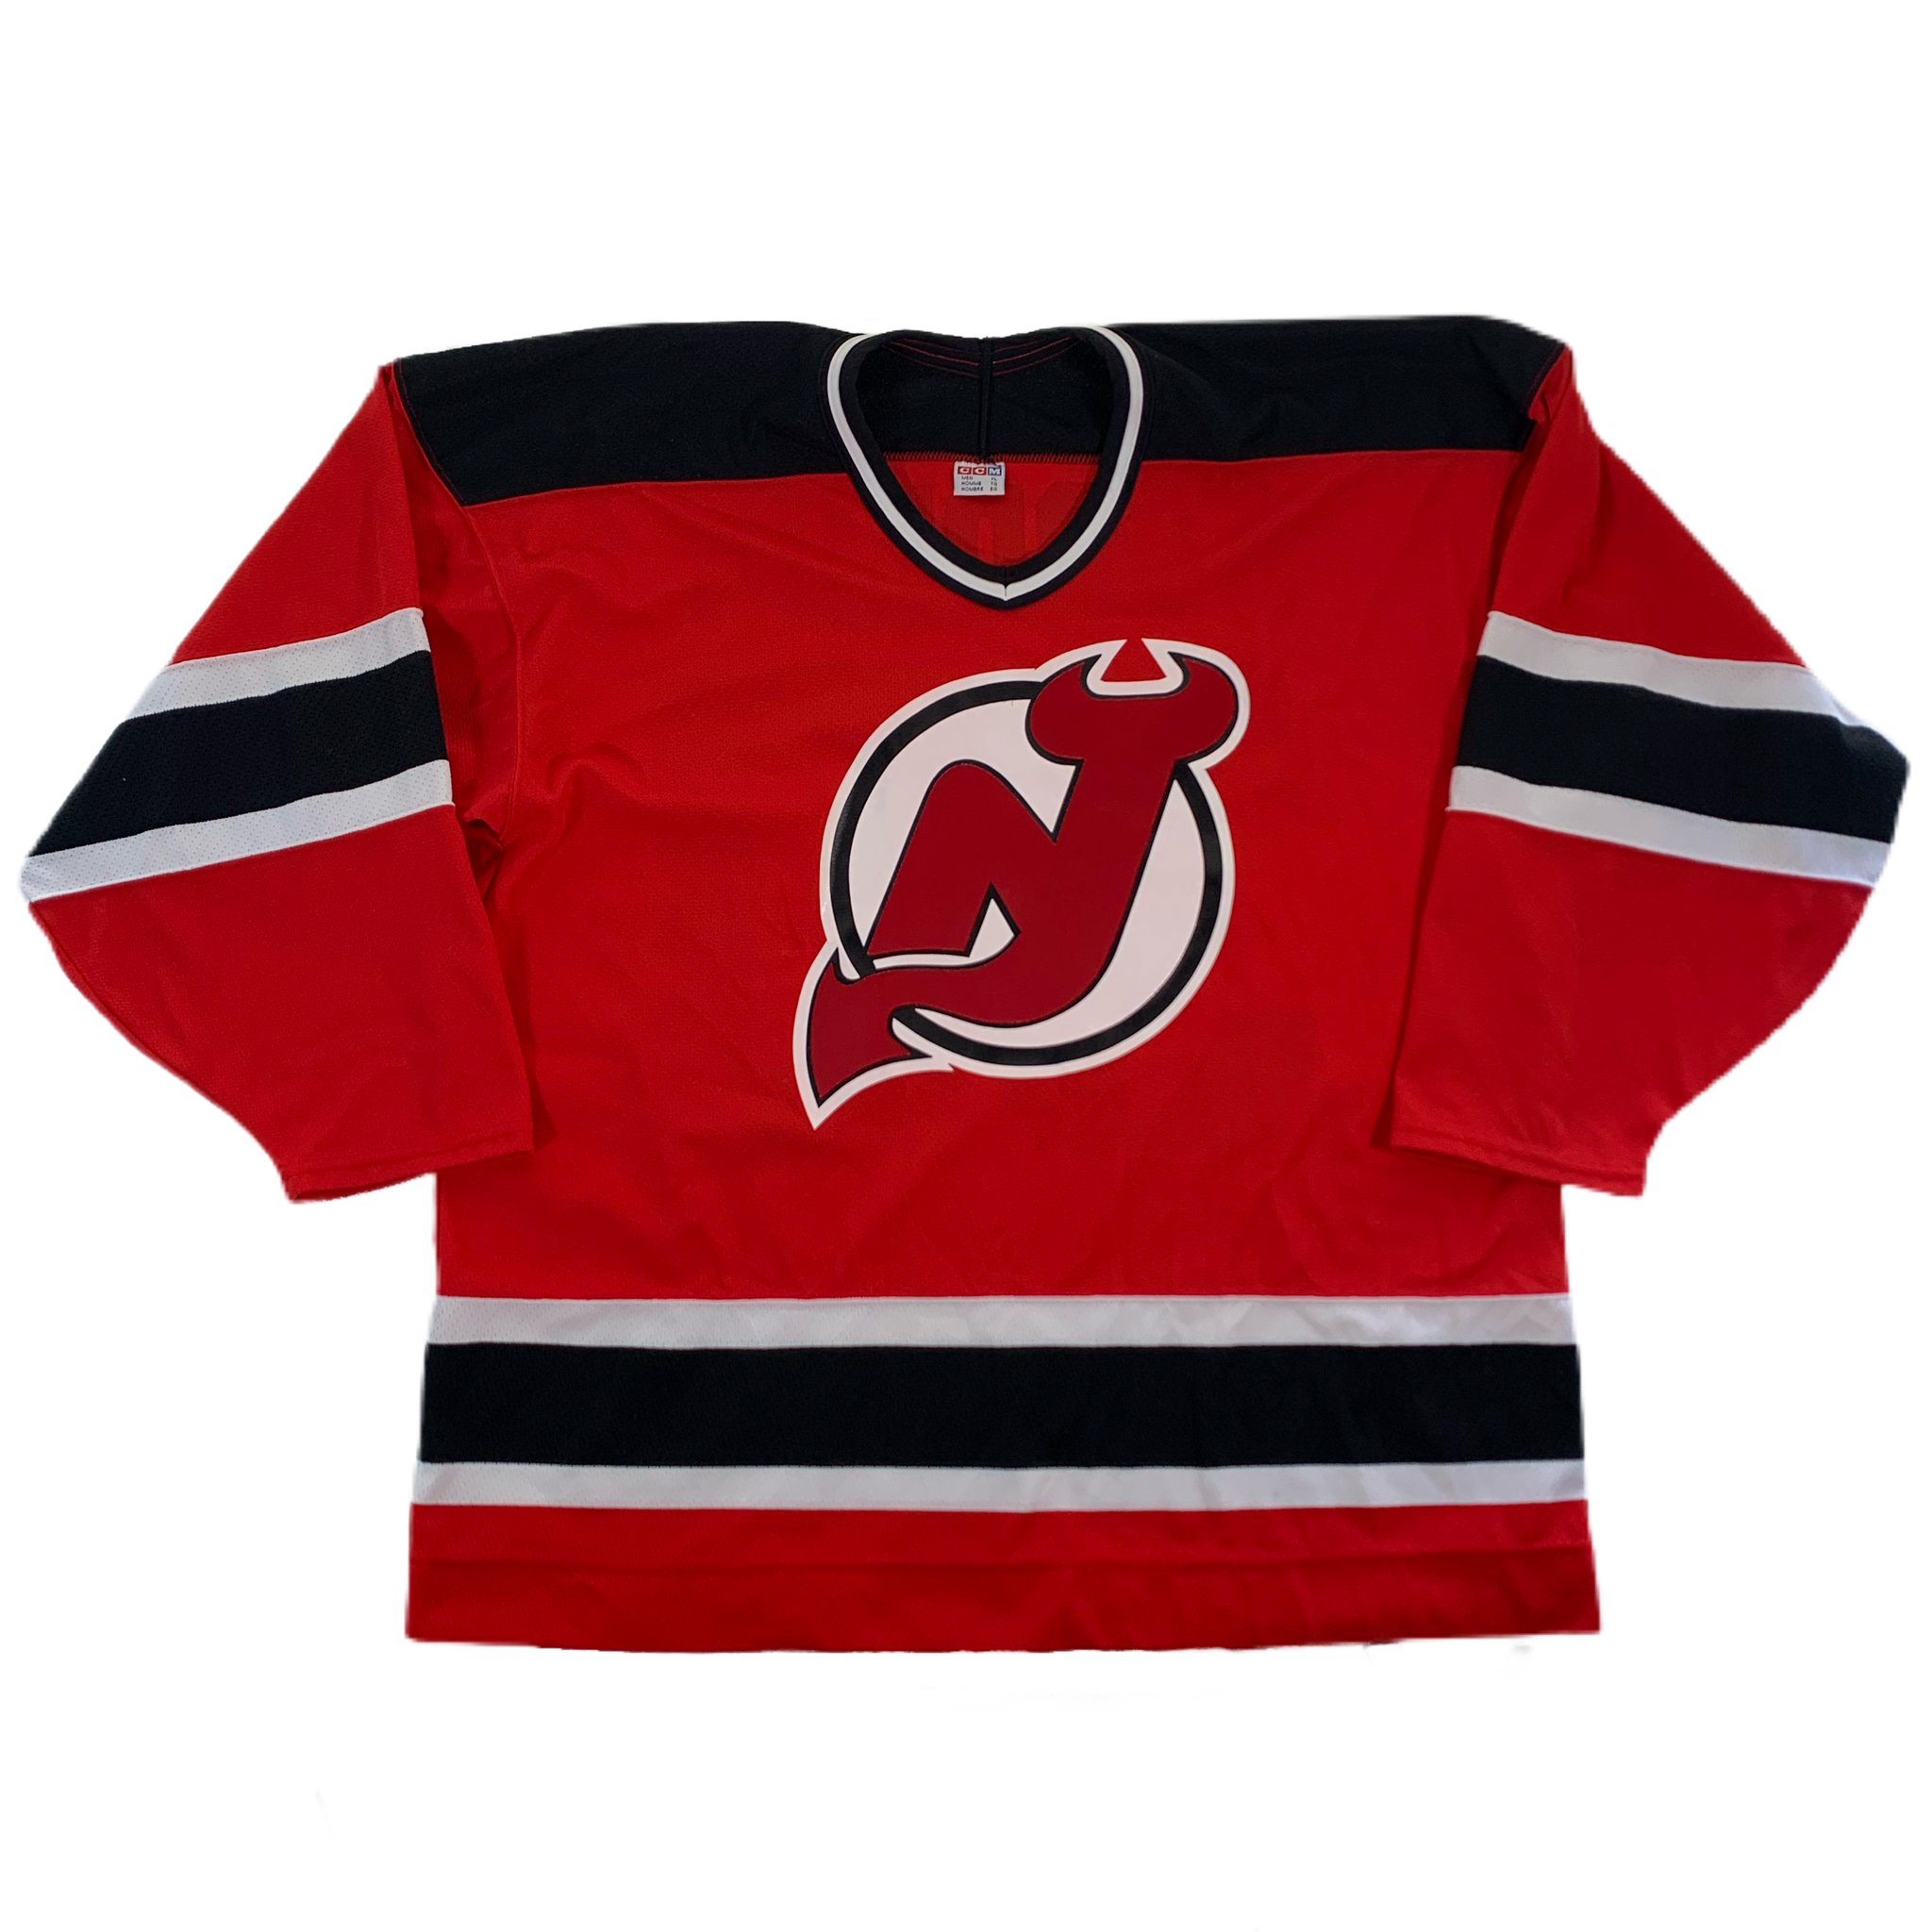 Martin BRODEUR 30 New Jersey Devils CCM Jersey Sweater M 